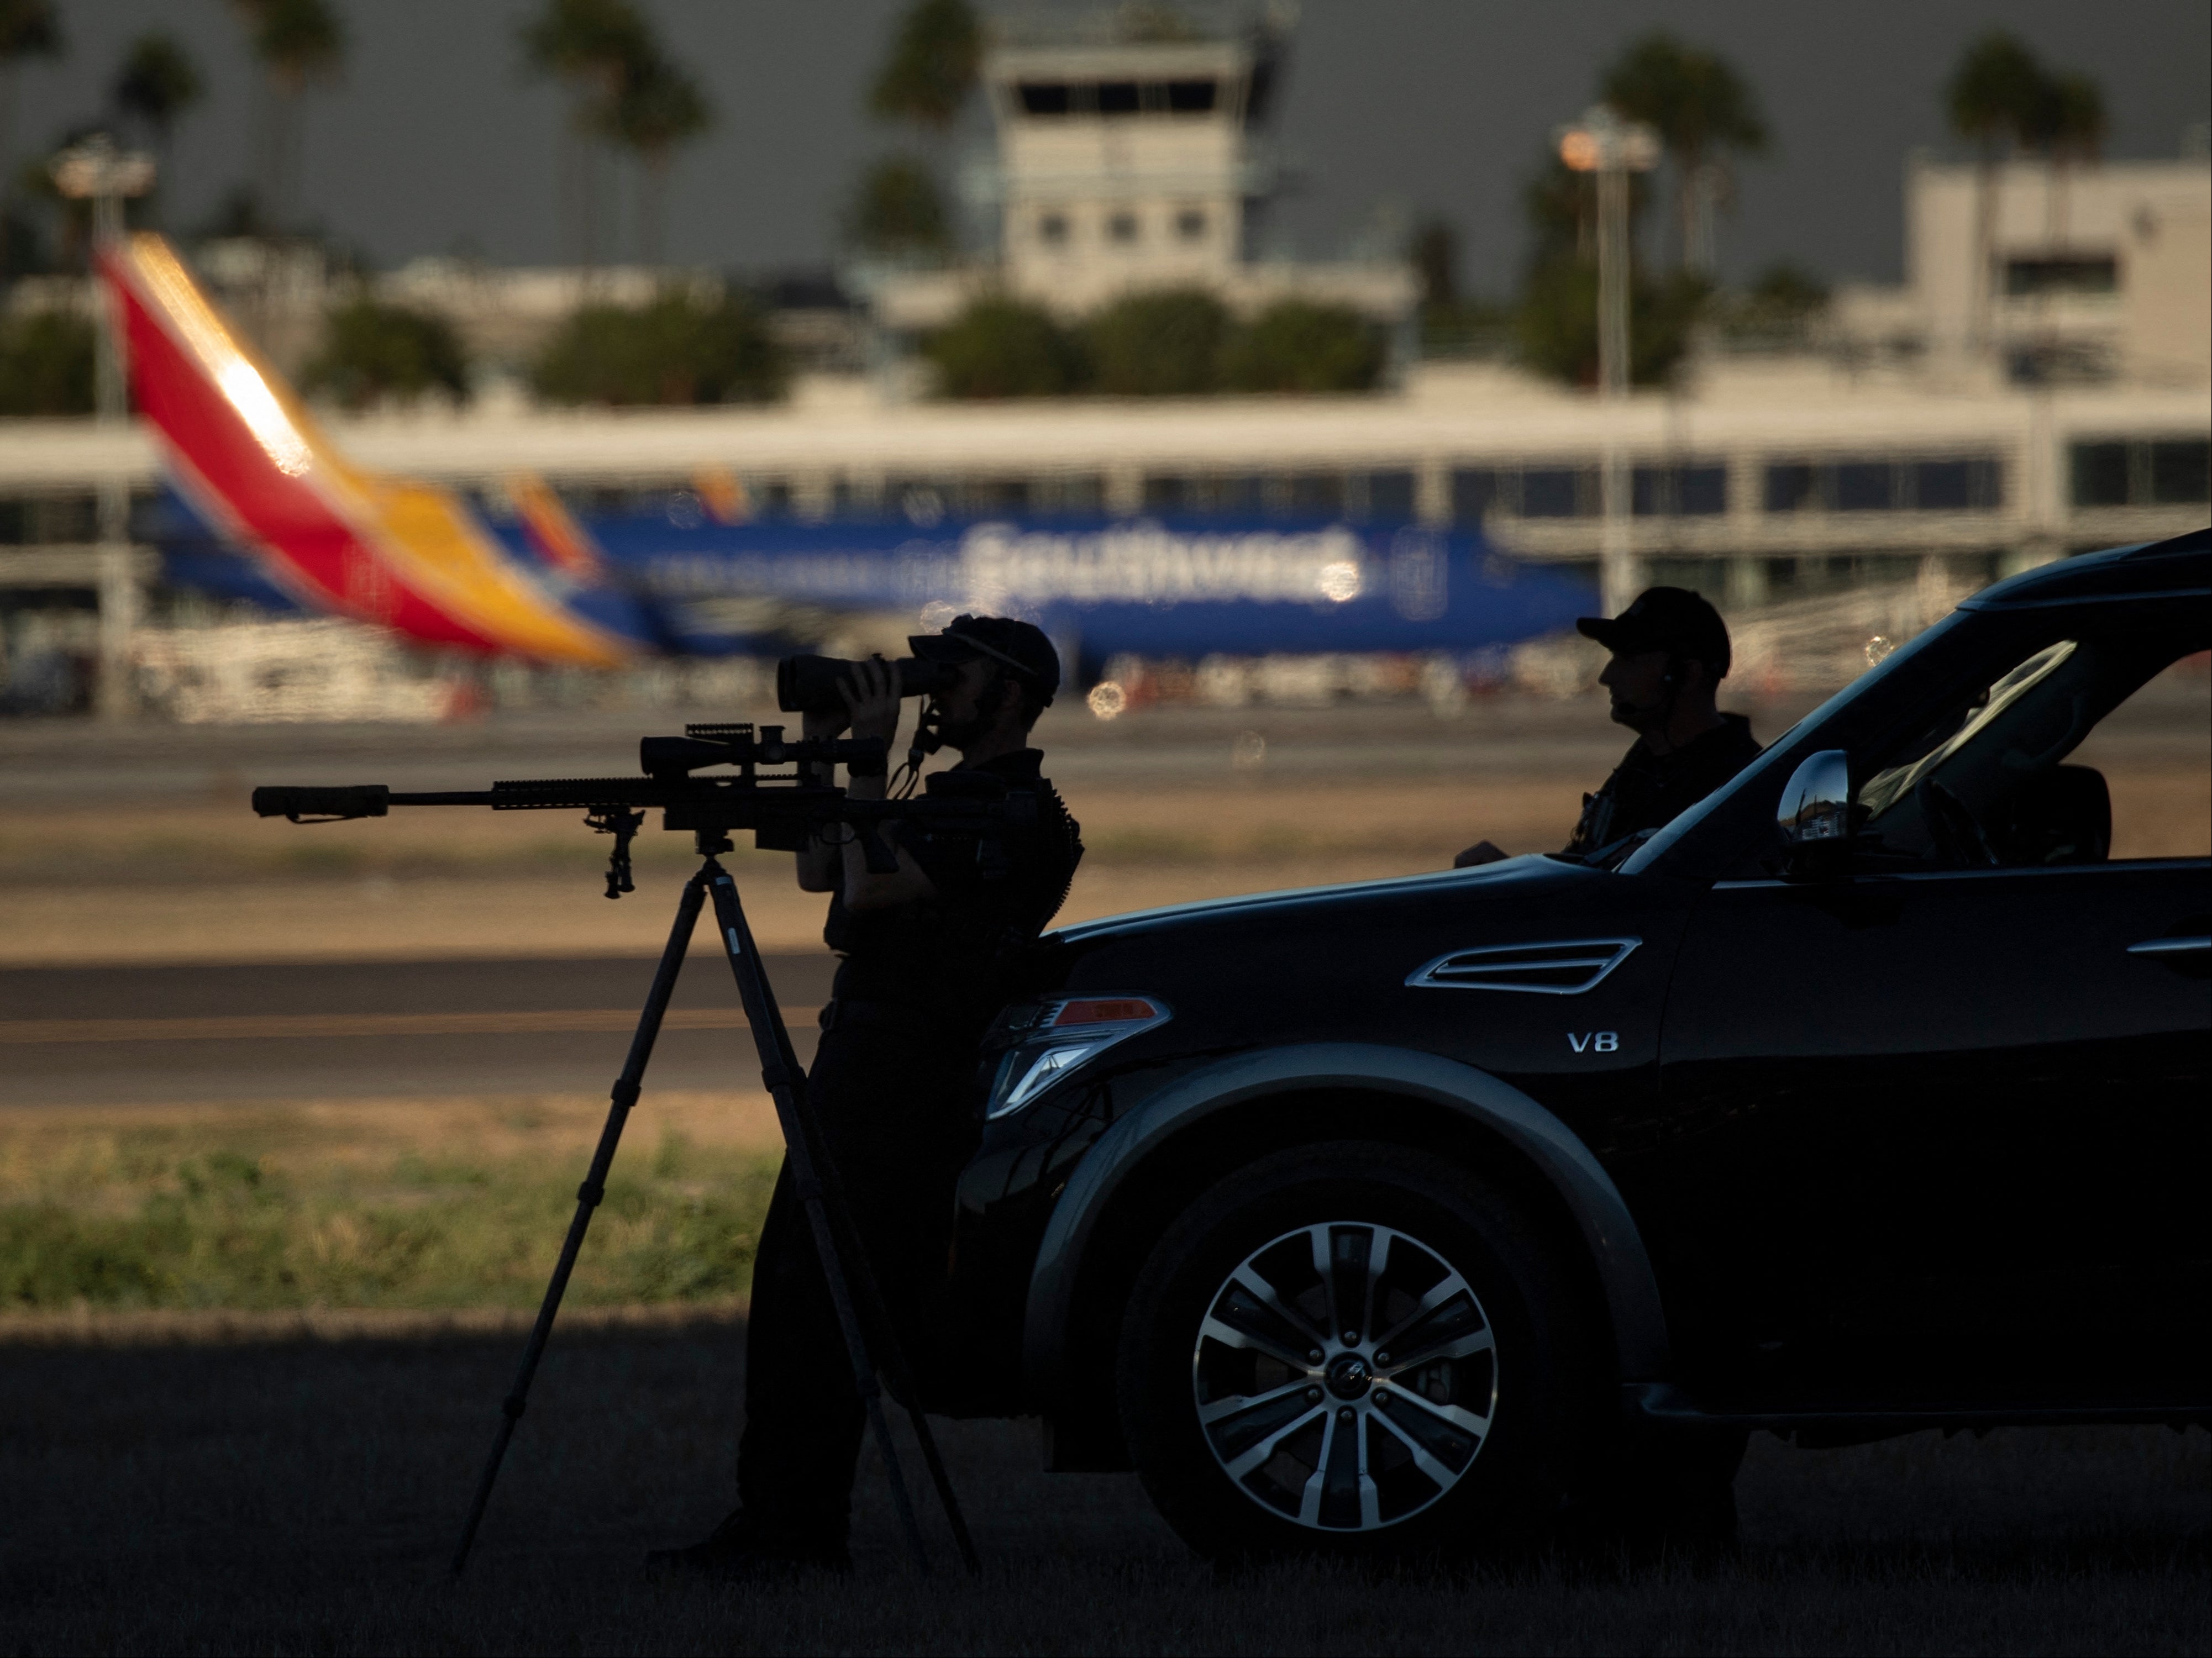 Snipers stand guard as US President Joe Biden arrives at Long Beach Airport in Long Beach, California on September 13, 2021